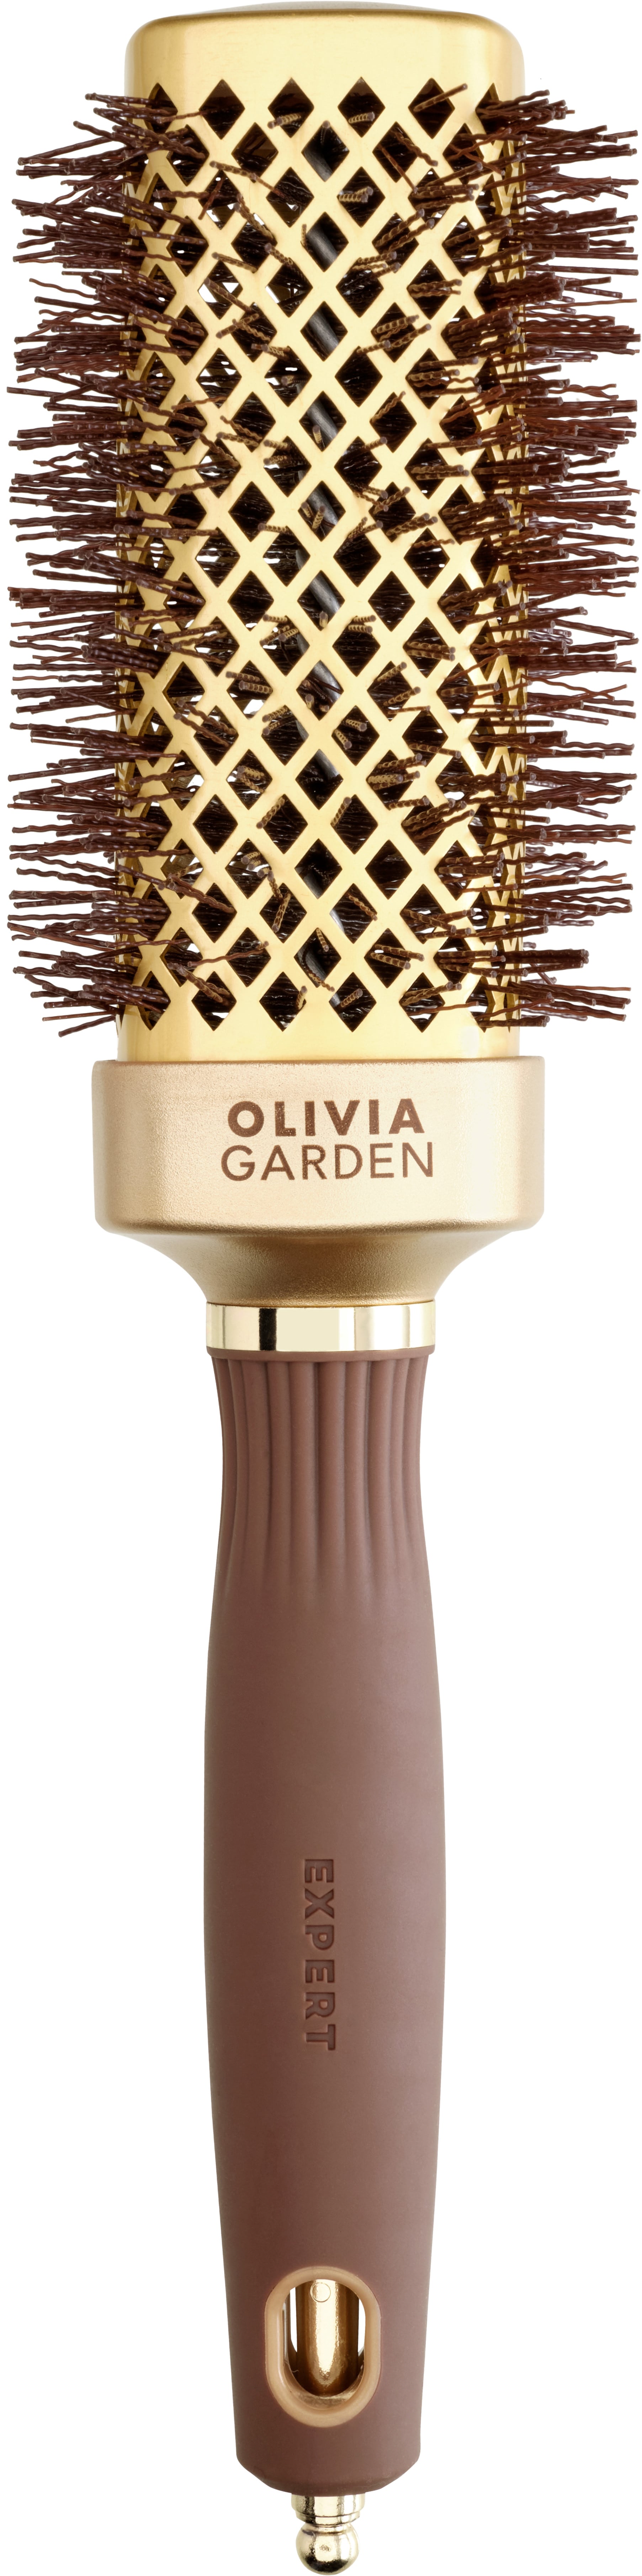 Olivia Garden Expert Blowout Straight Wavy Bristle Gold&Brown 40